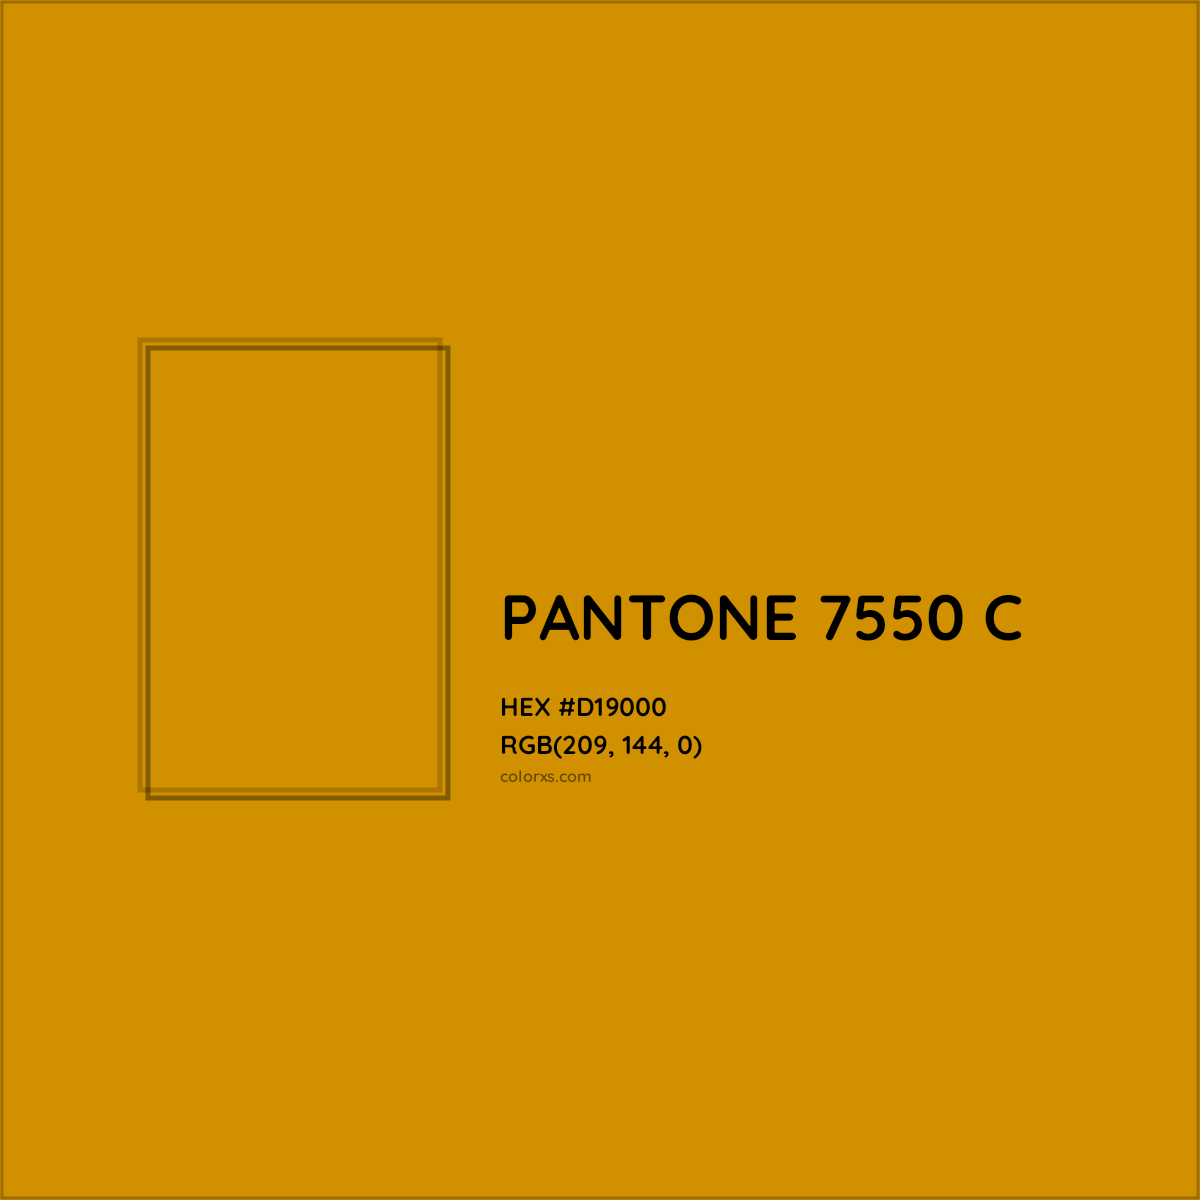 HEX #D19000 PANTONE 7550 C CMS Pantone PMS - Color Code